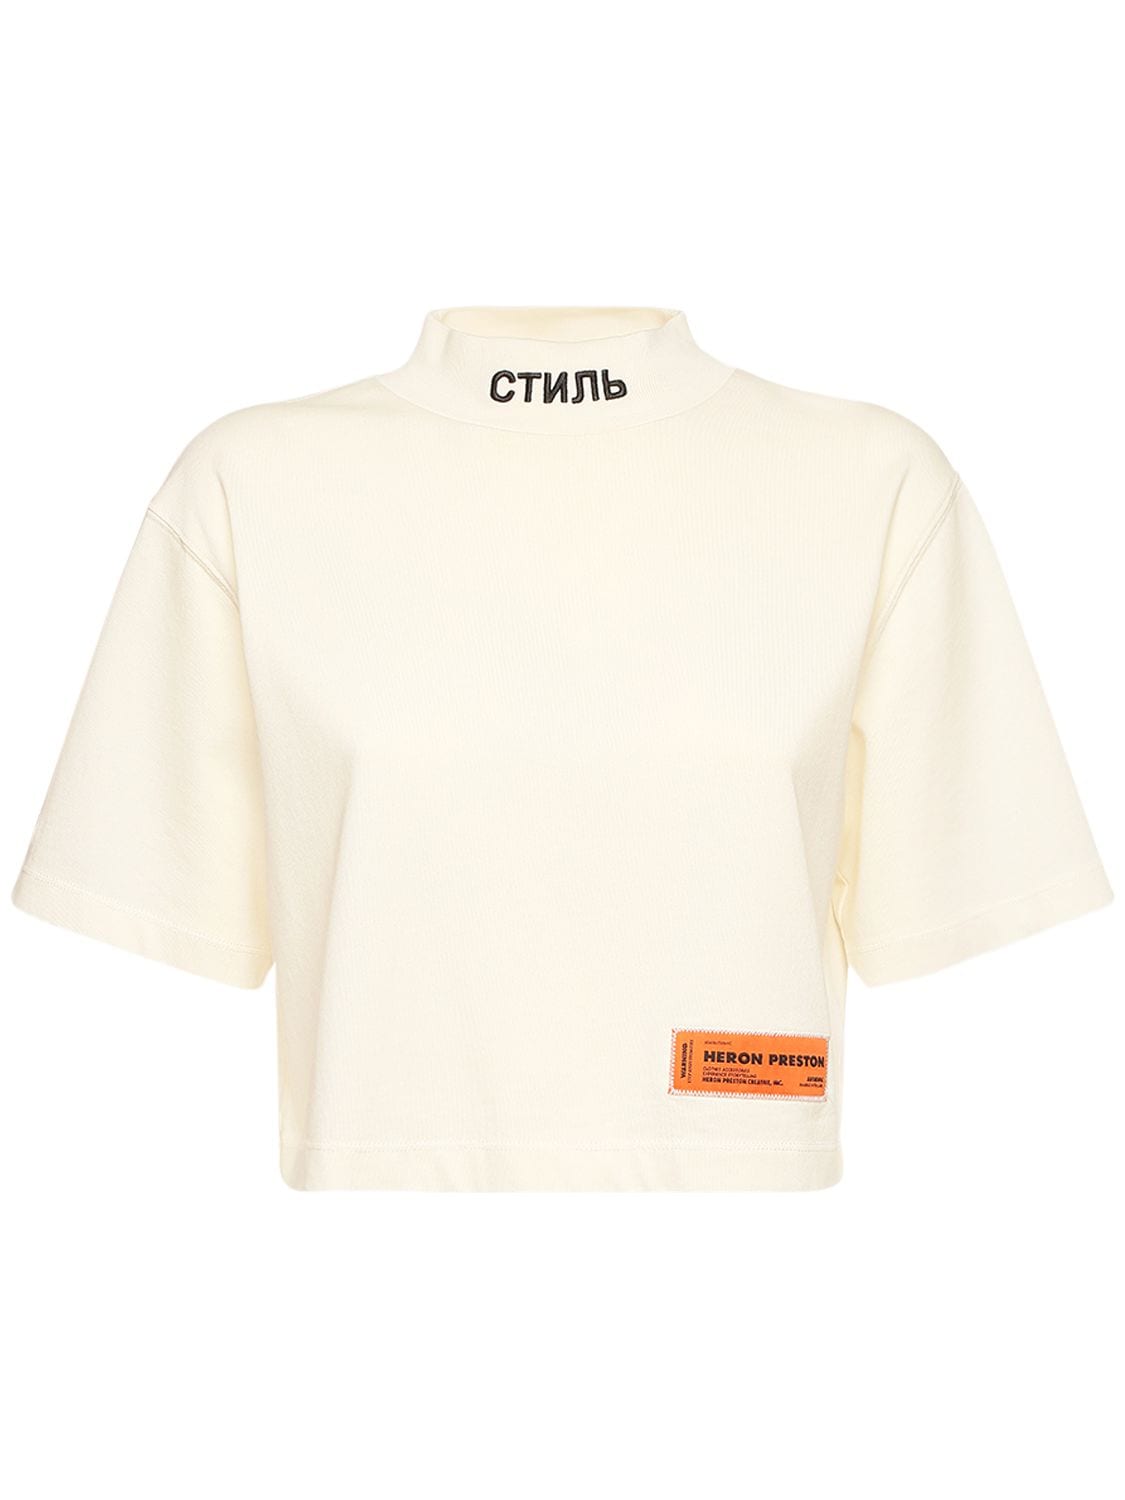 Mujer Camiseta Cropped Ctnmb De Jersey De Algodón Xs - HERON PRESTON - Modalova